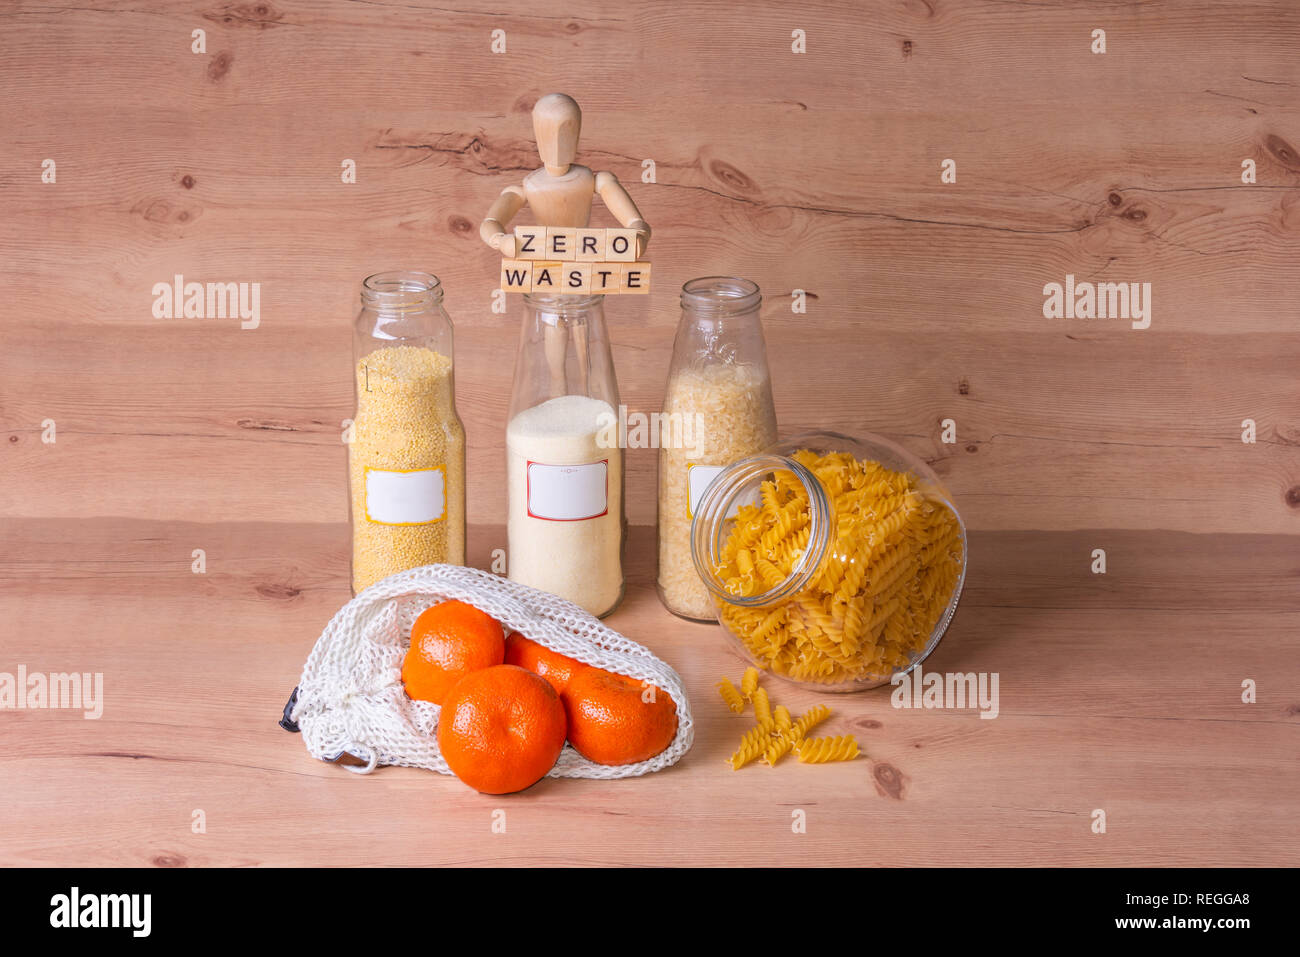 Zero Waste, plastic free, Minimalist, food Stock Photo